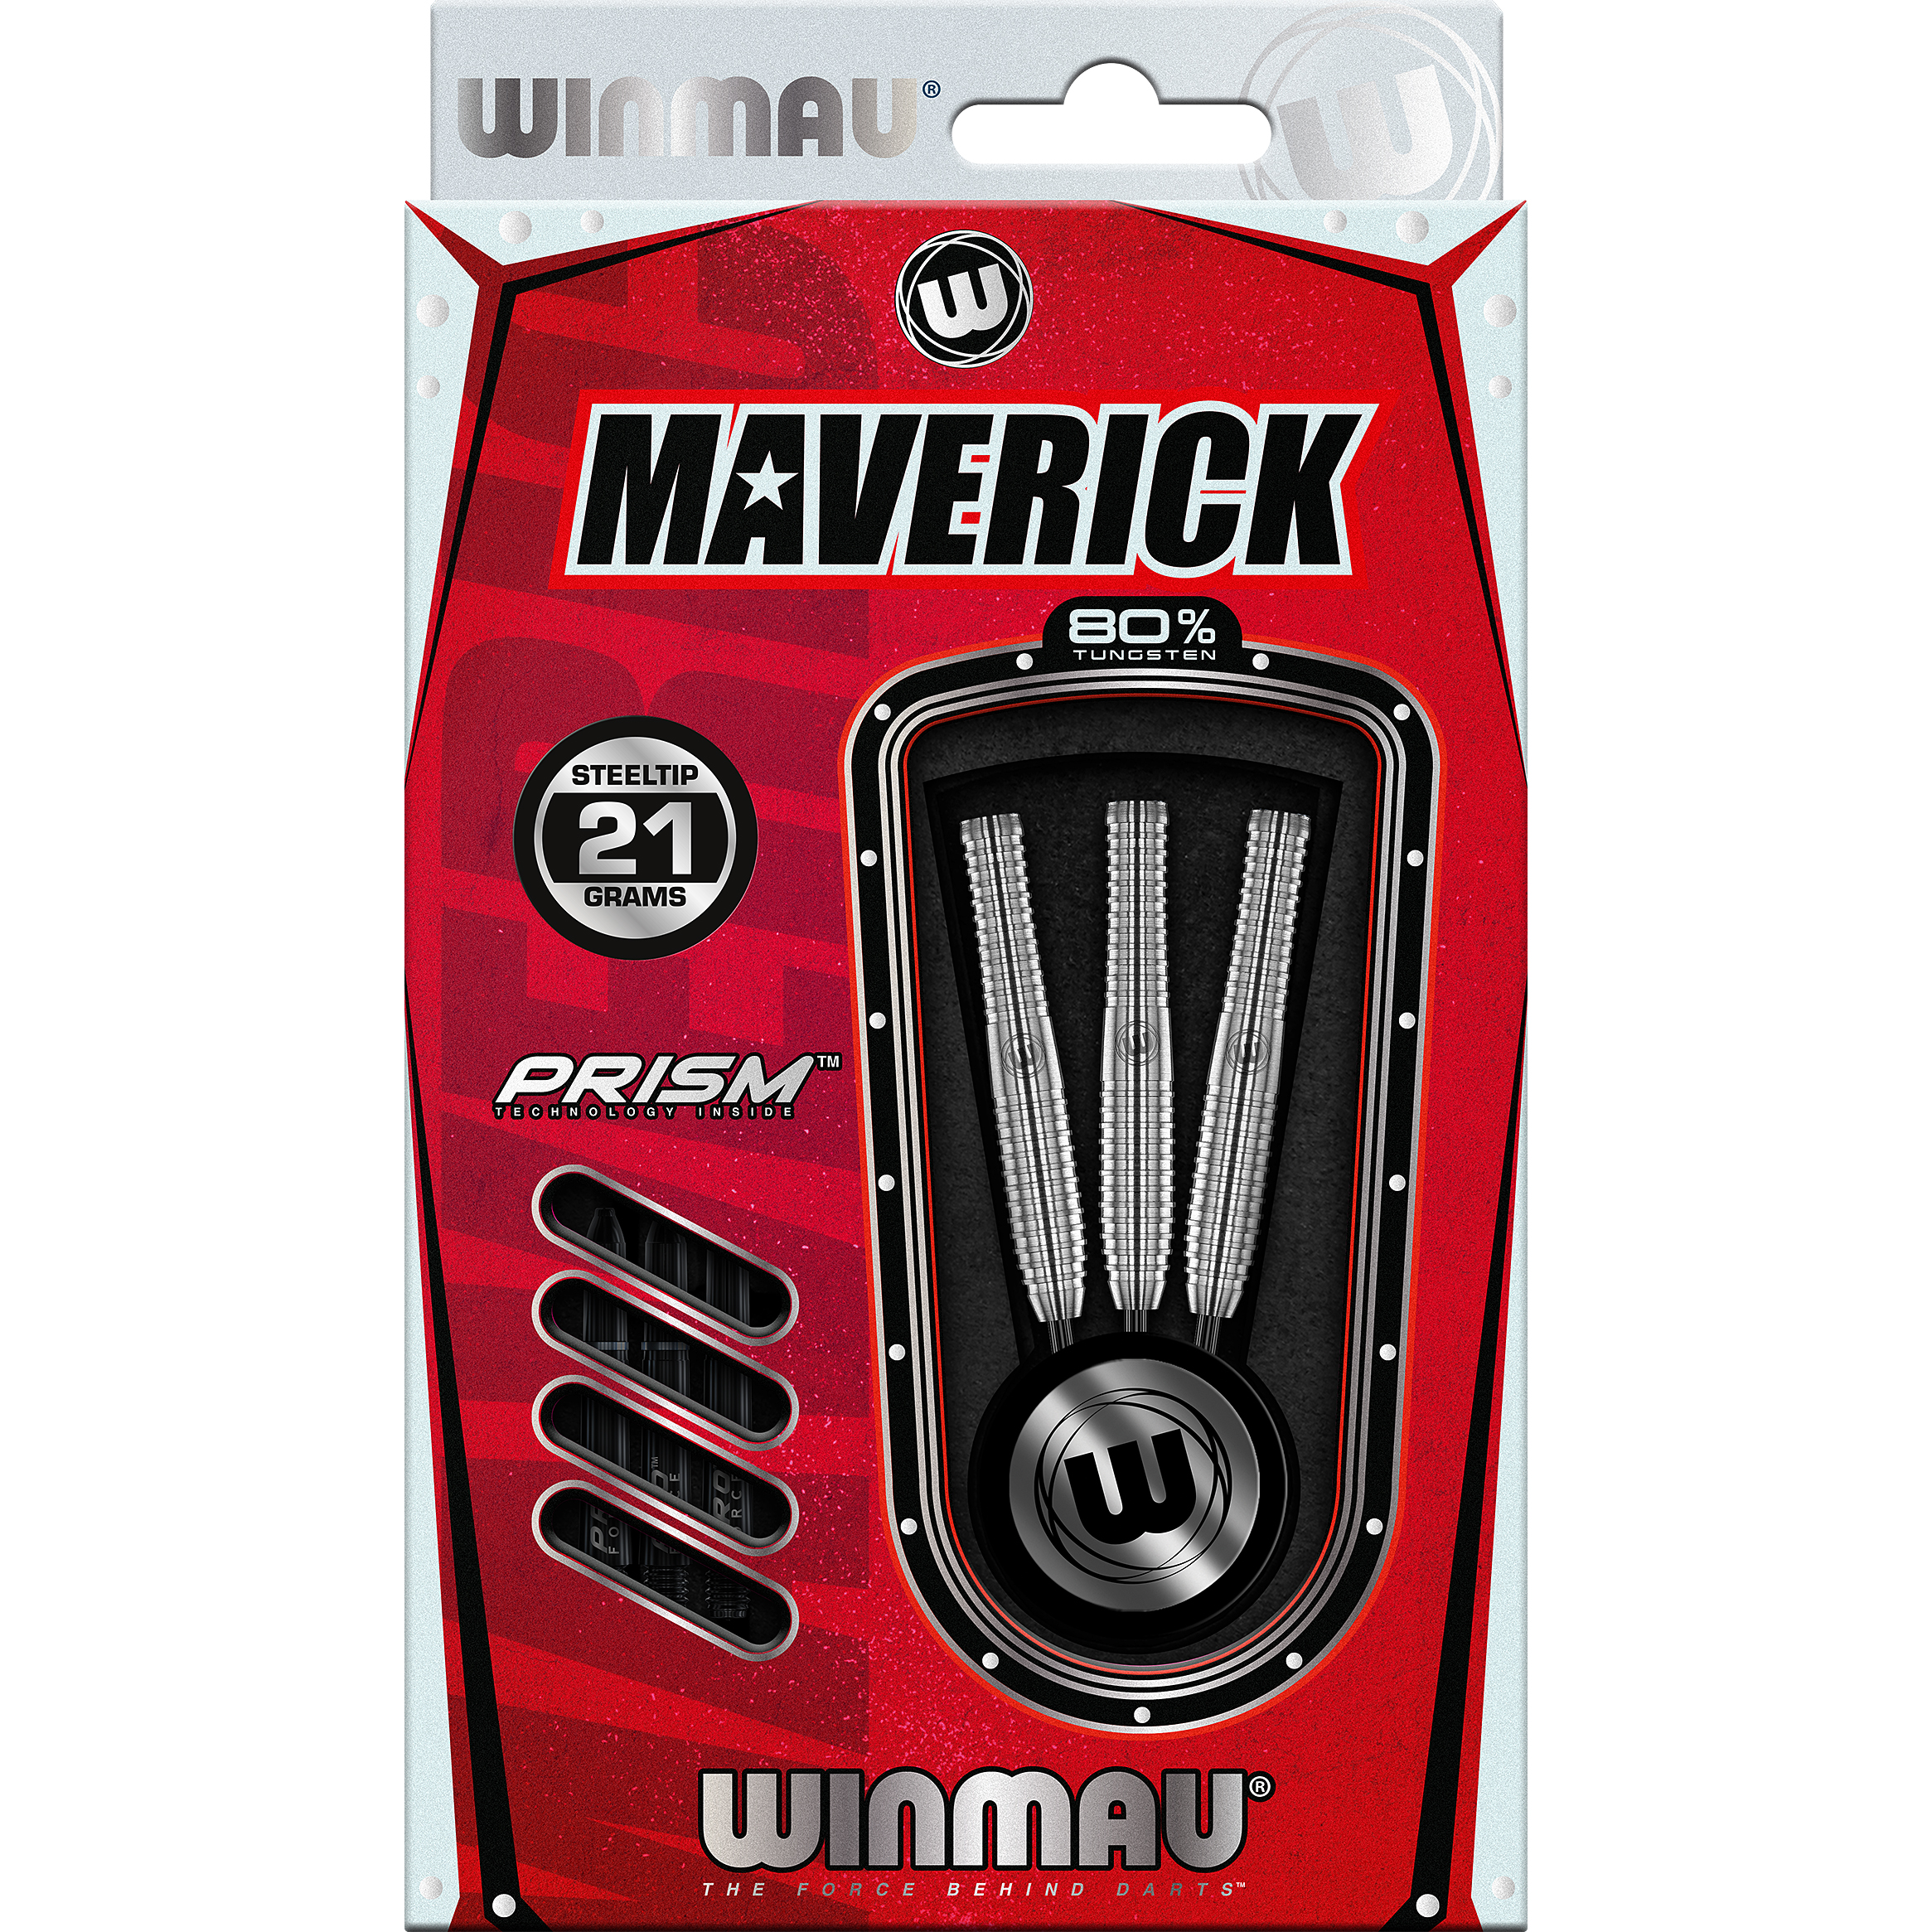 Winmau - Maverick - Steeldart